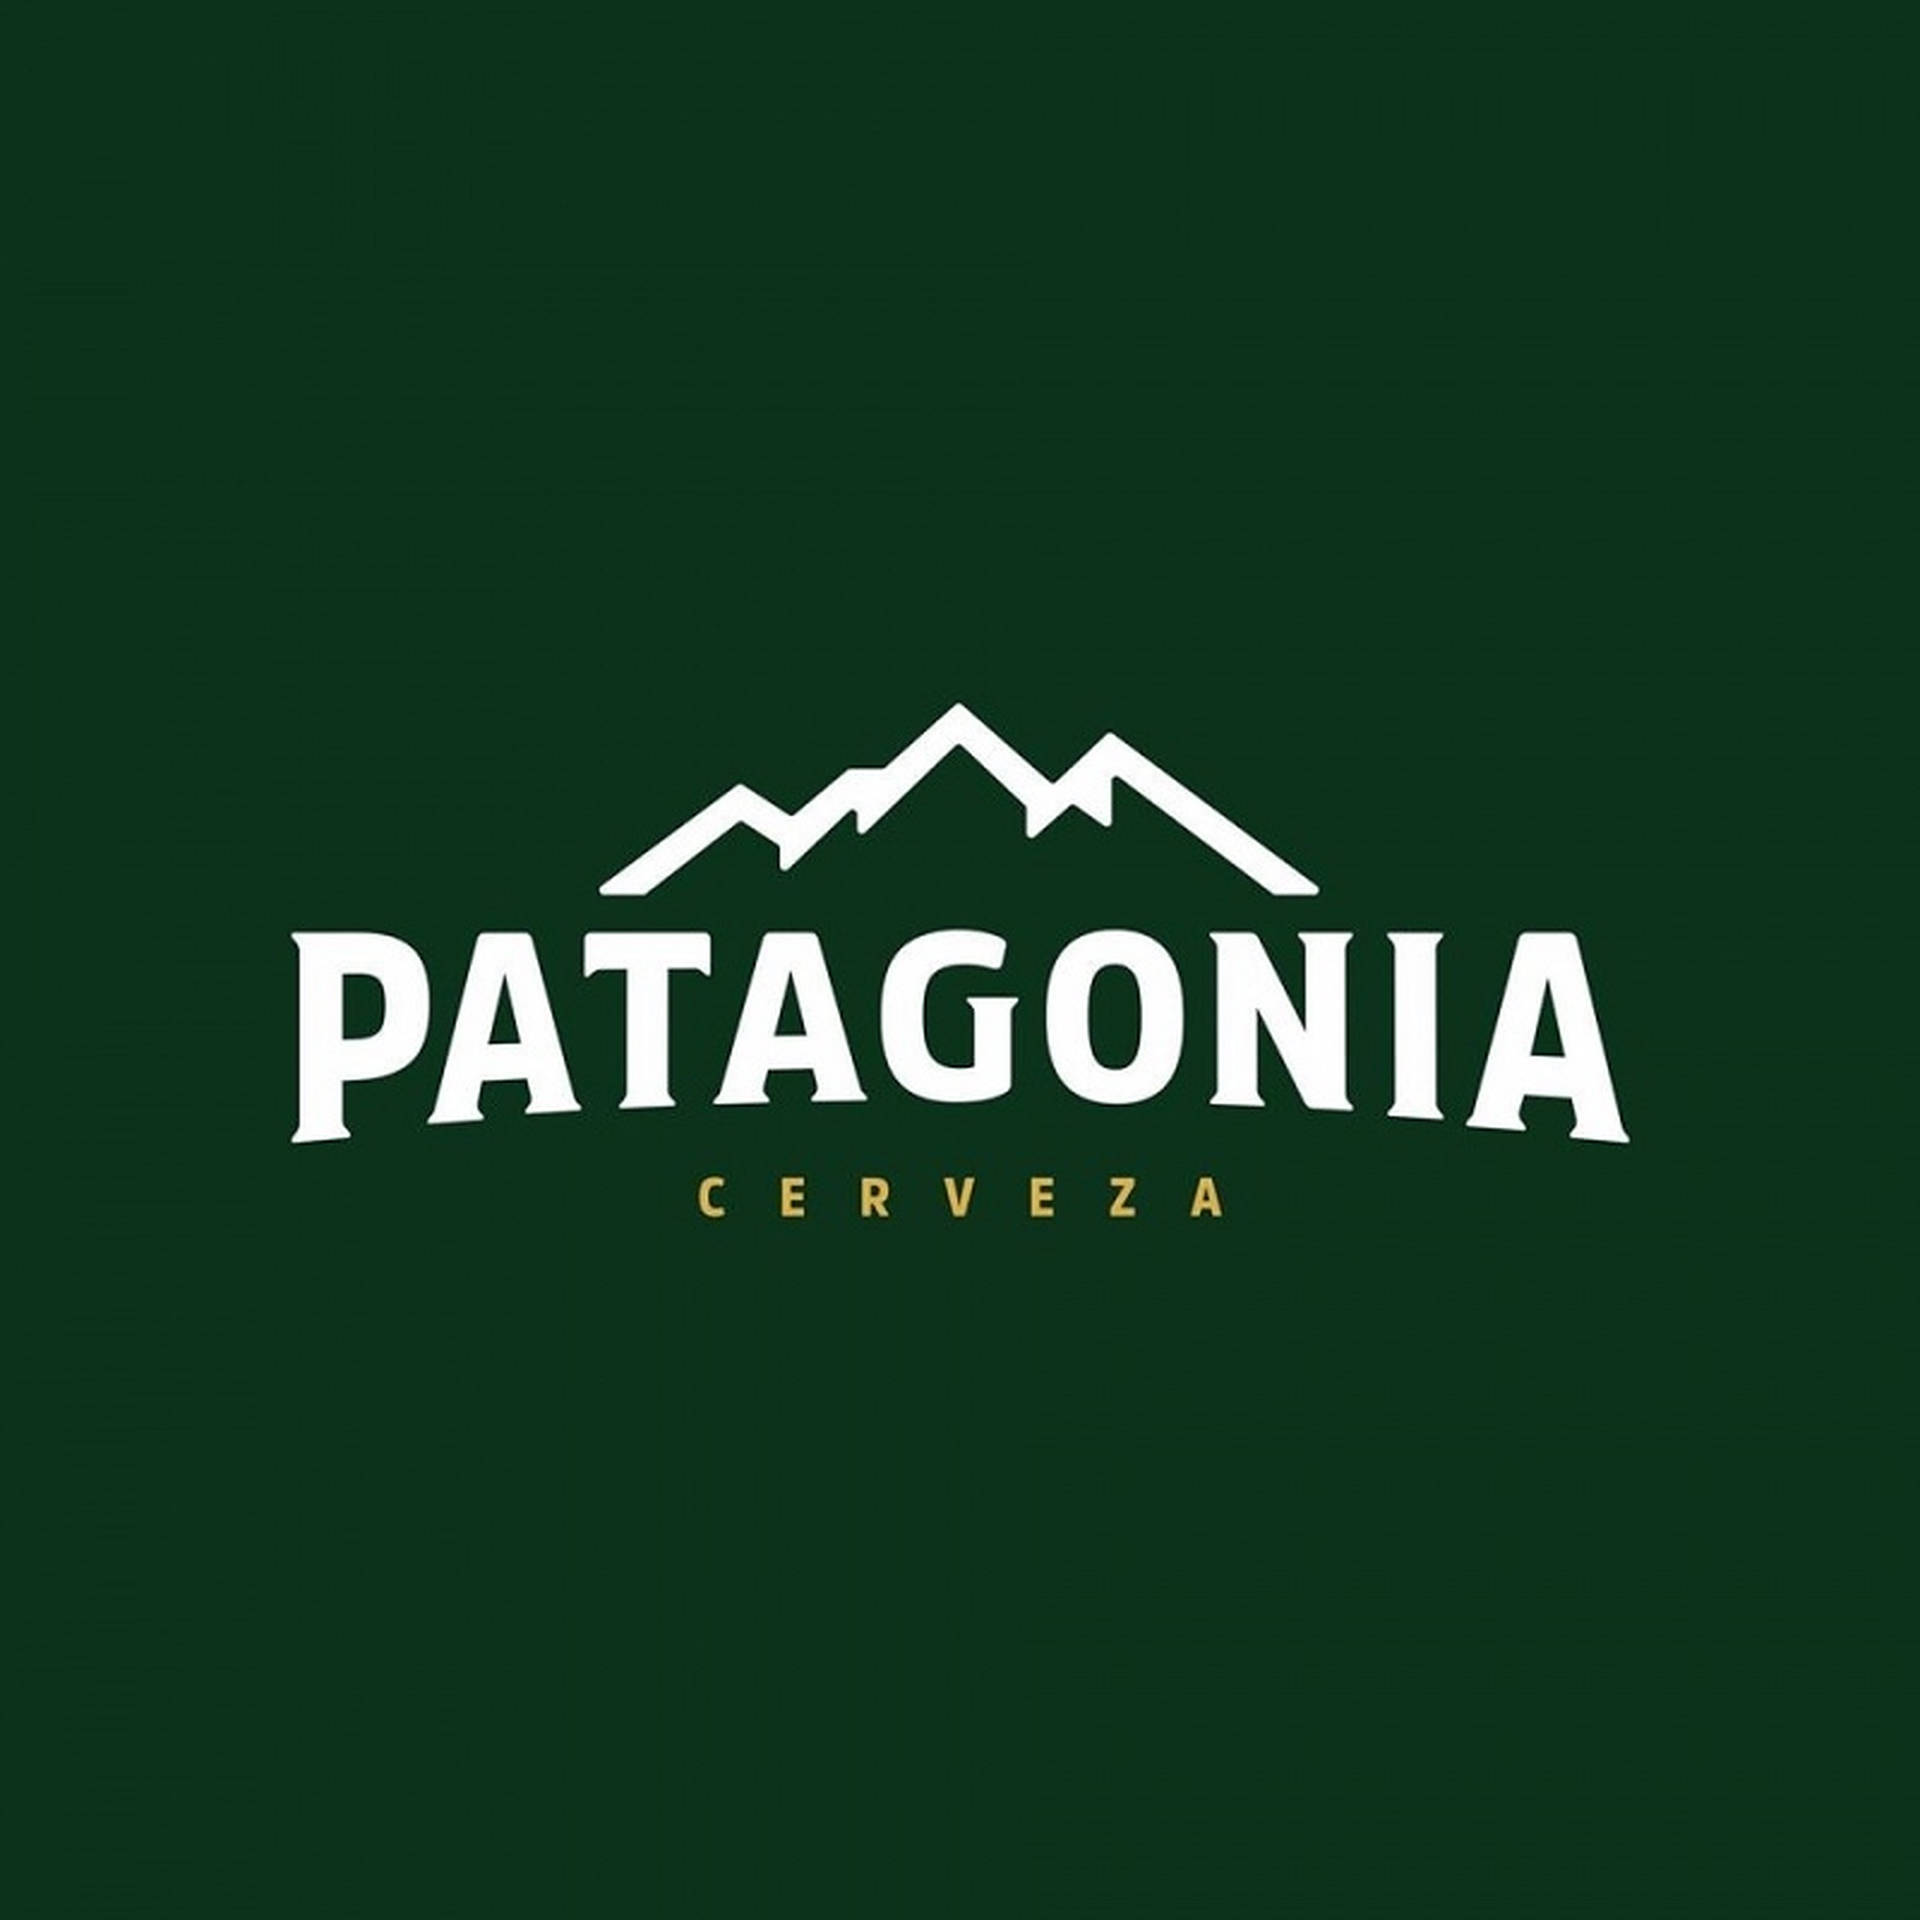 Green Patagonia Logo Cerveza Background